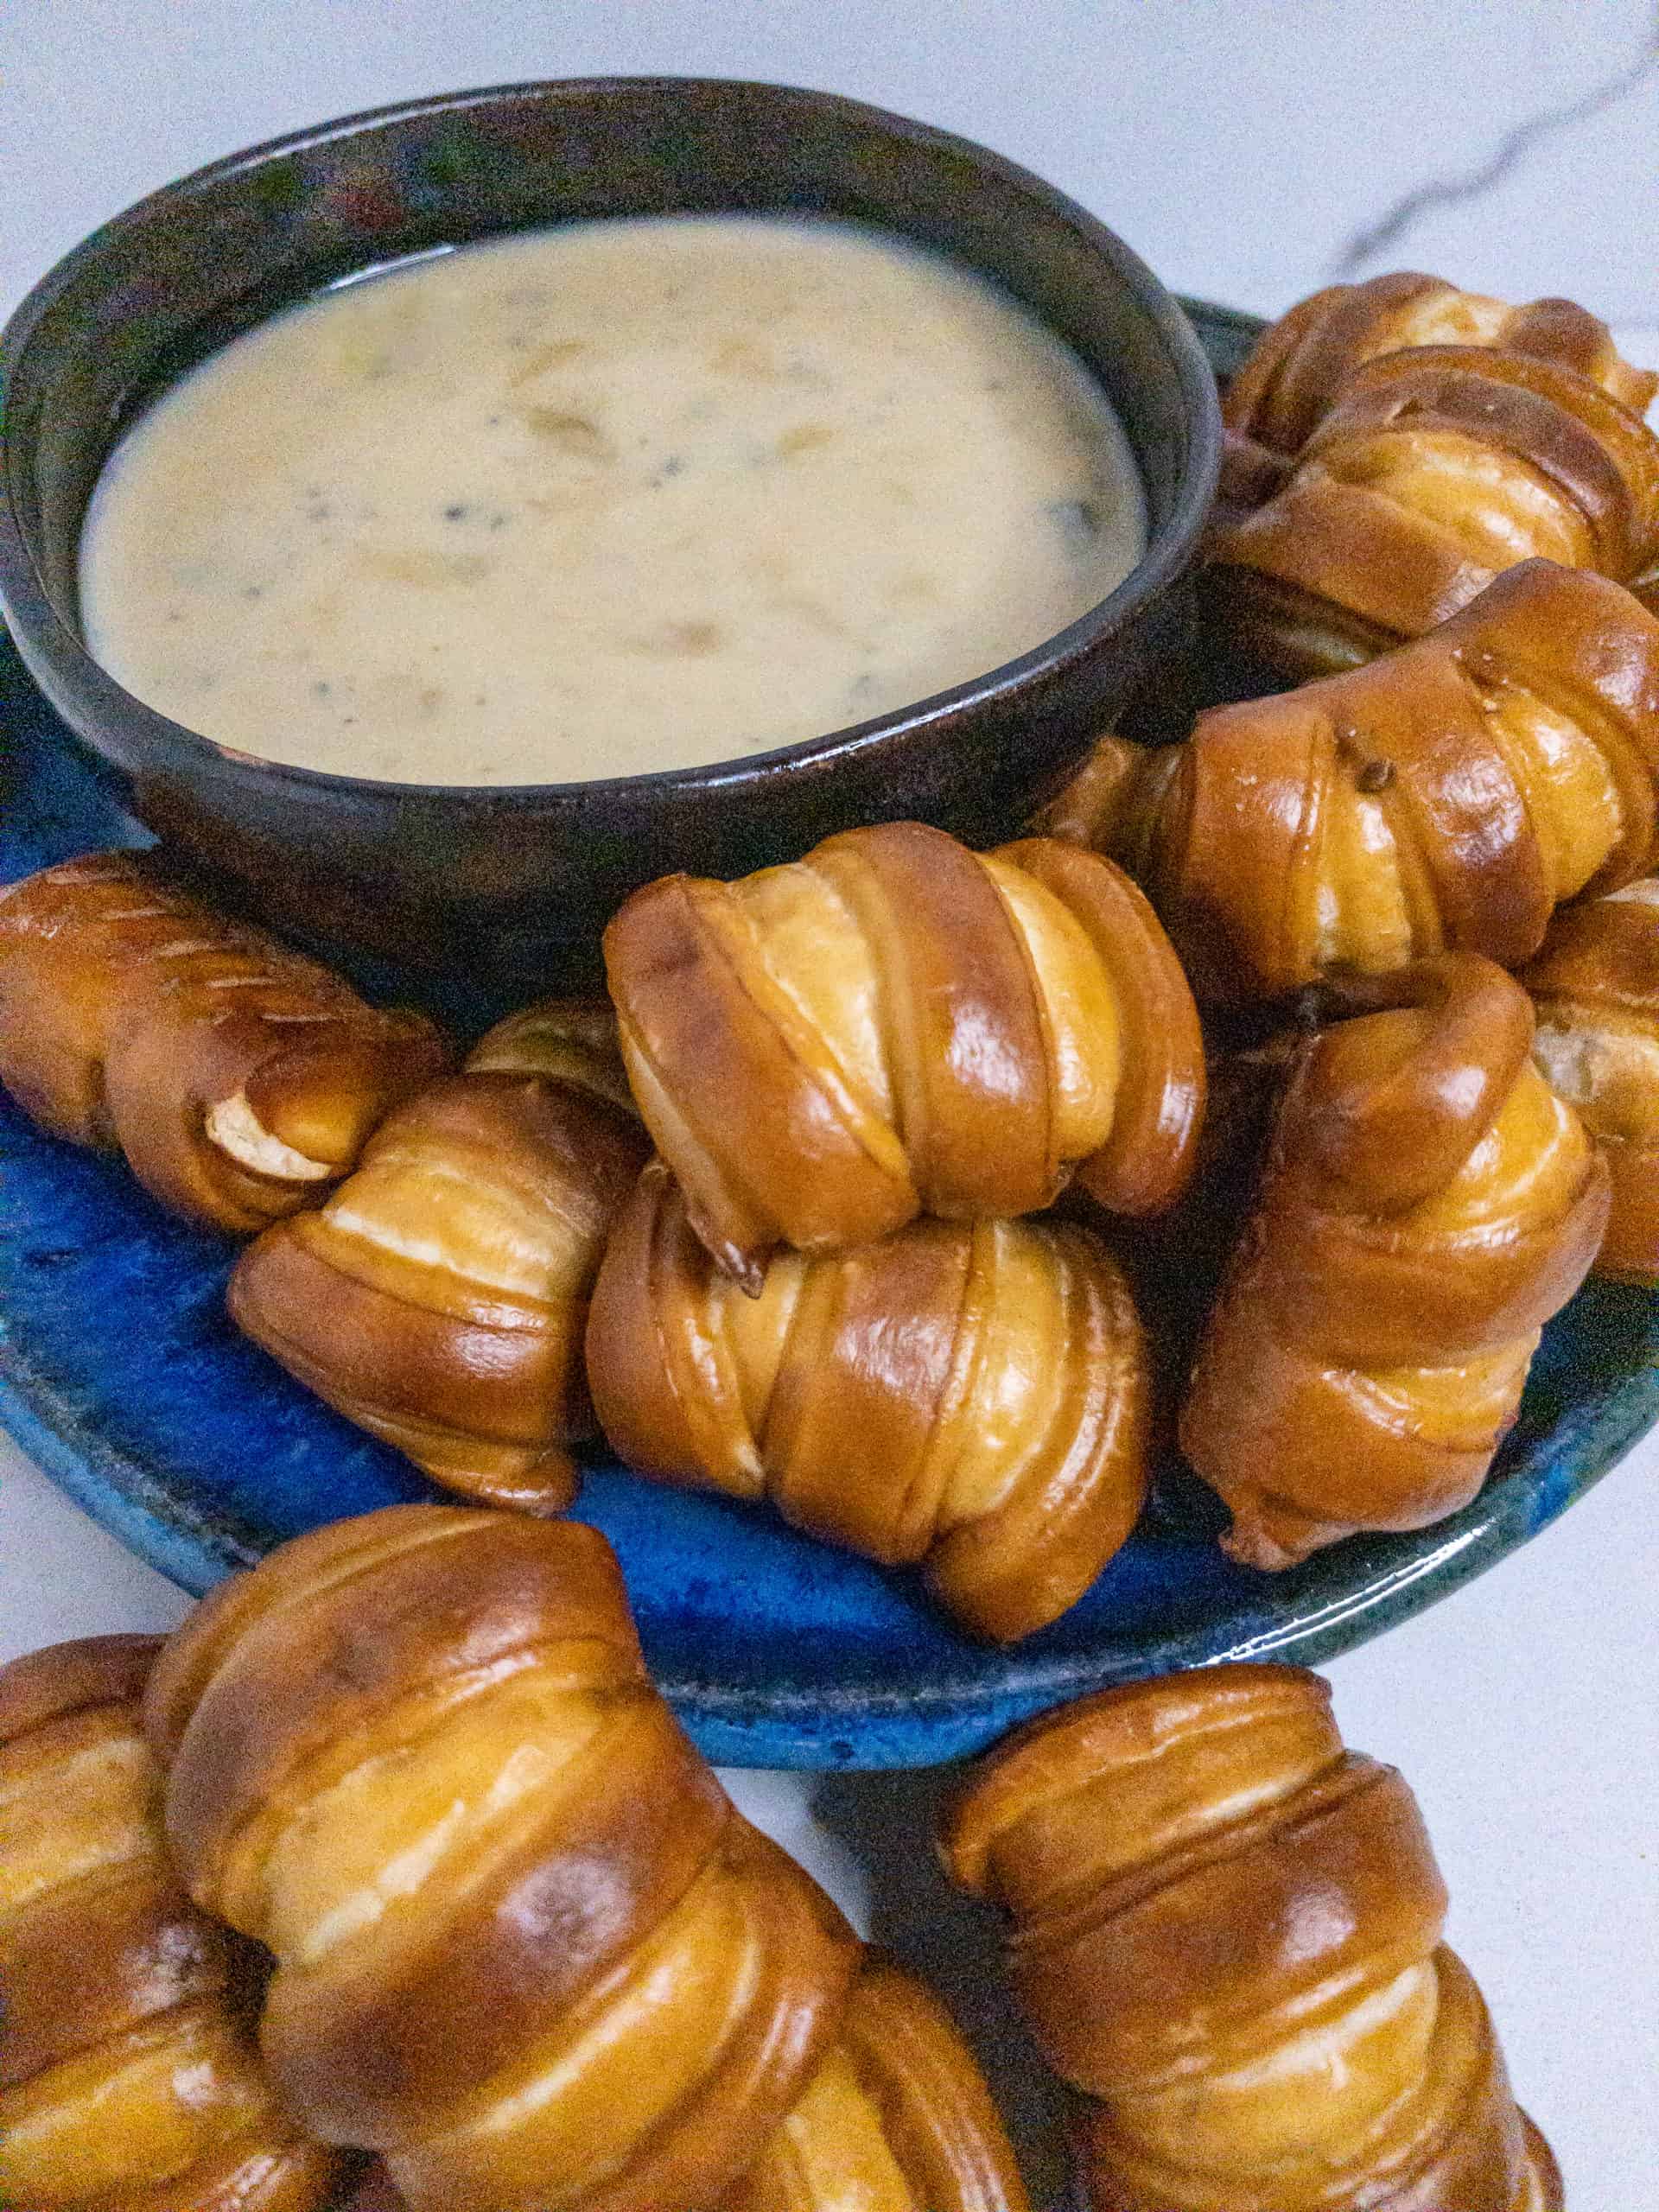 Blue cheese fondue dip and pretzel bites